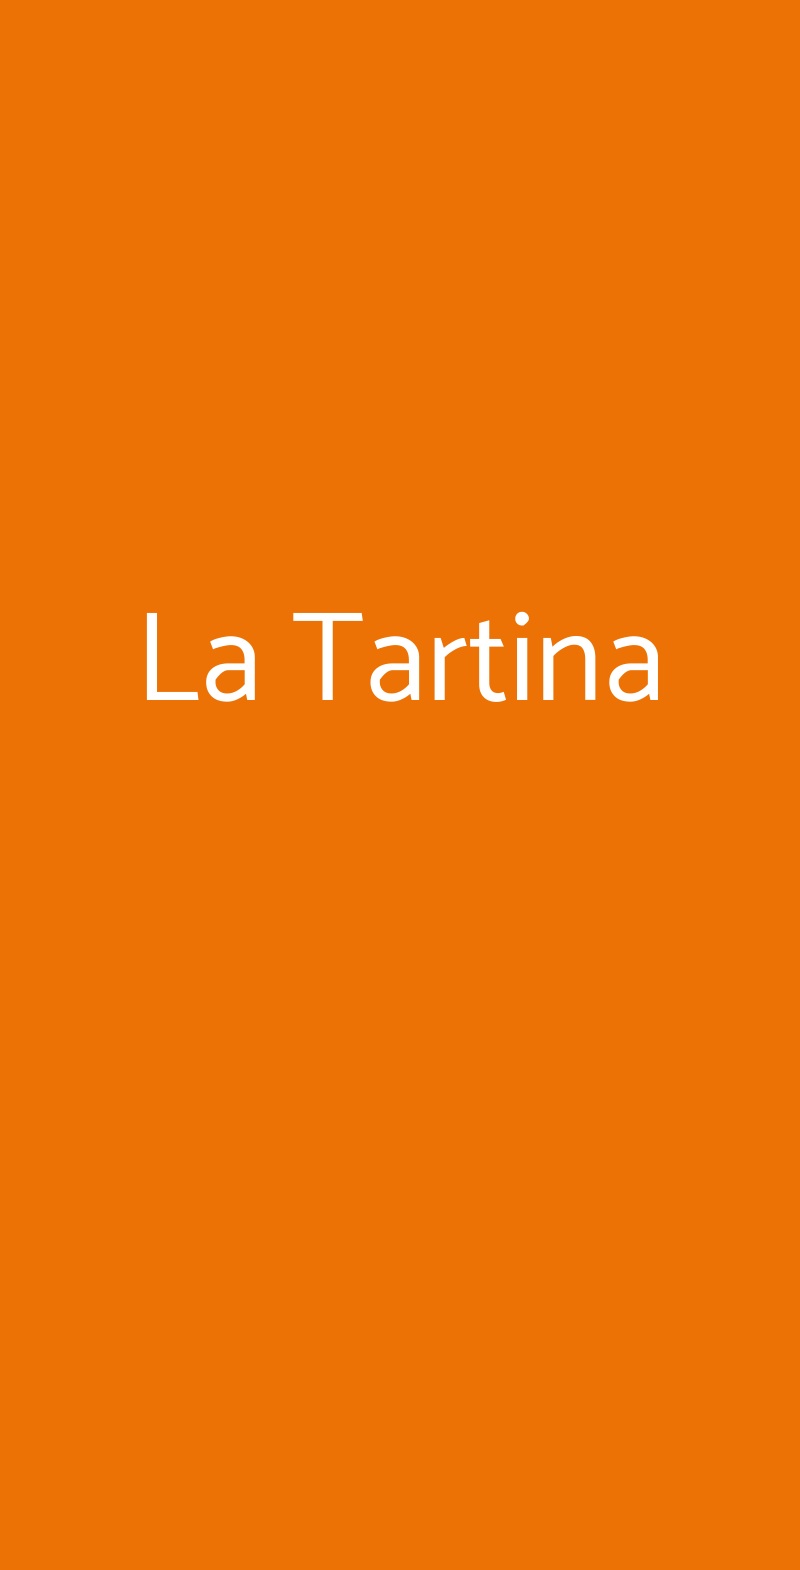 La Tartina Milano menù 1 pagina